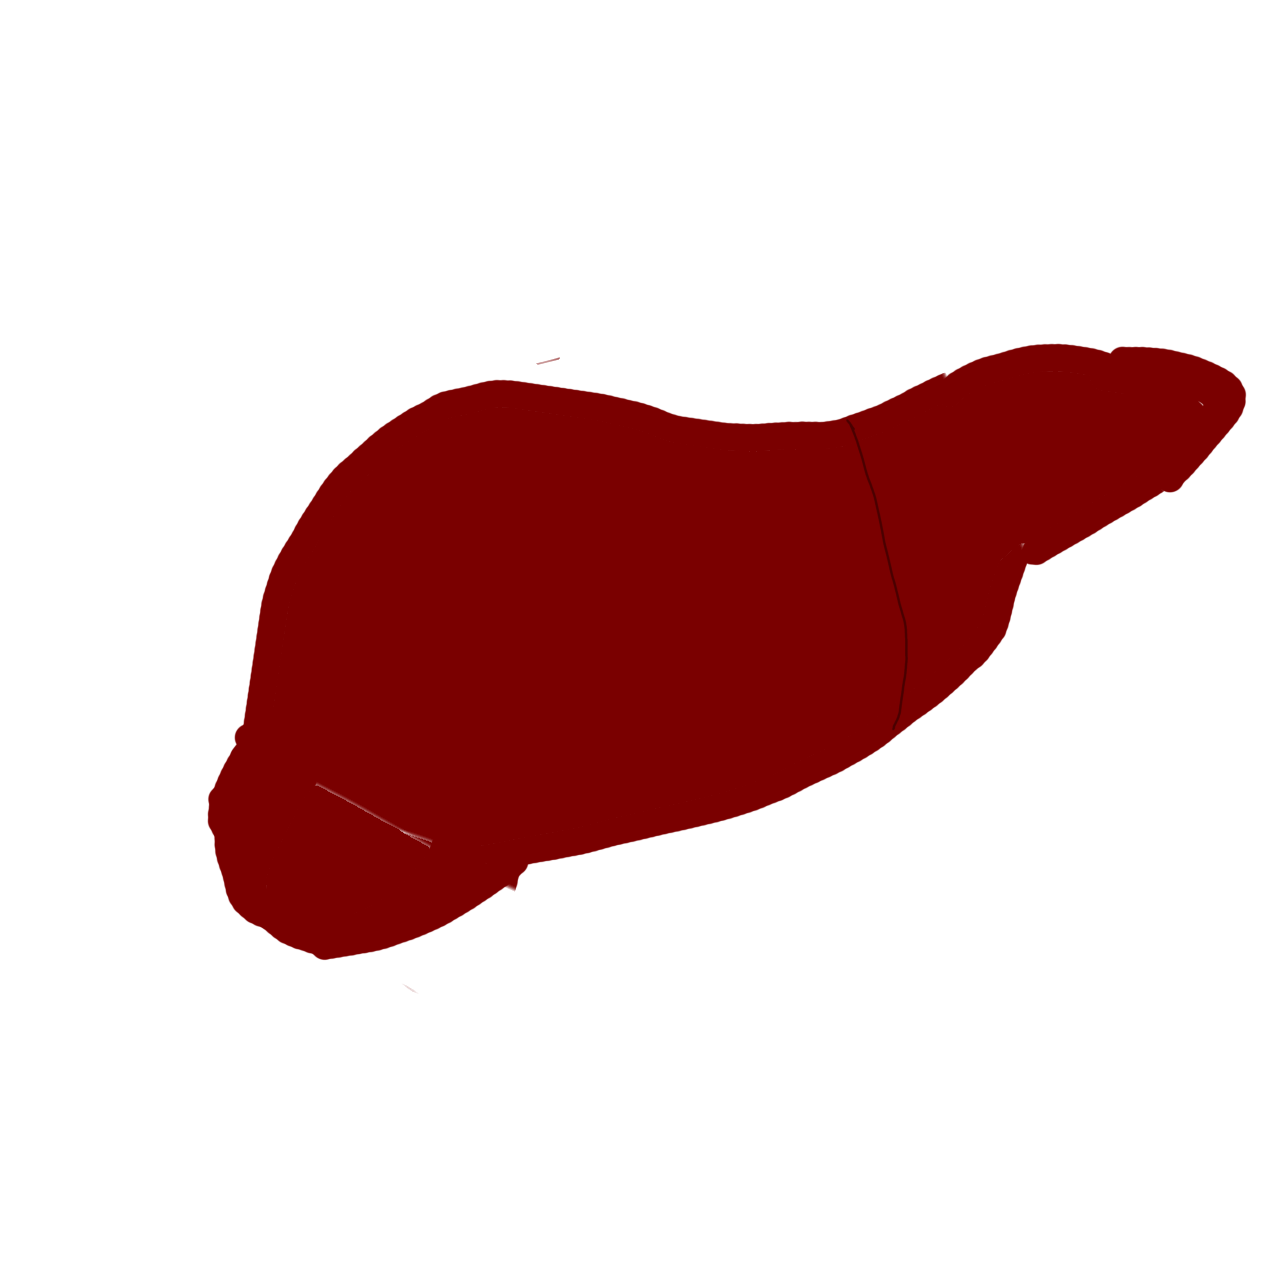 dark red symbol of a human liver.